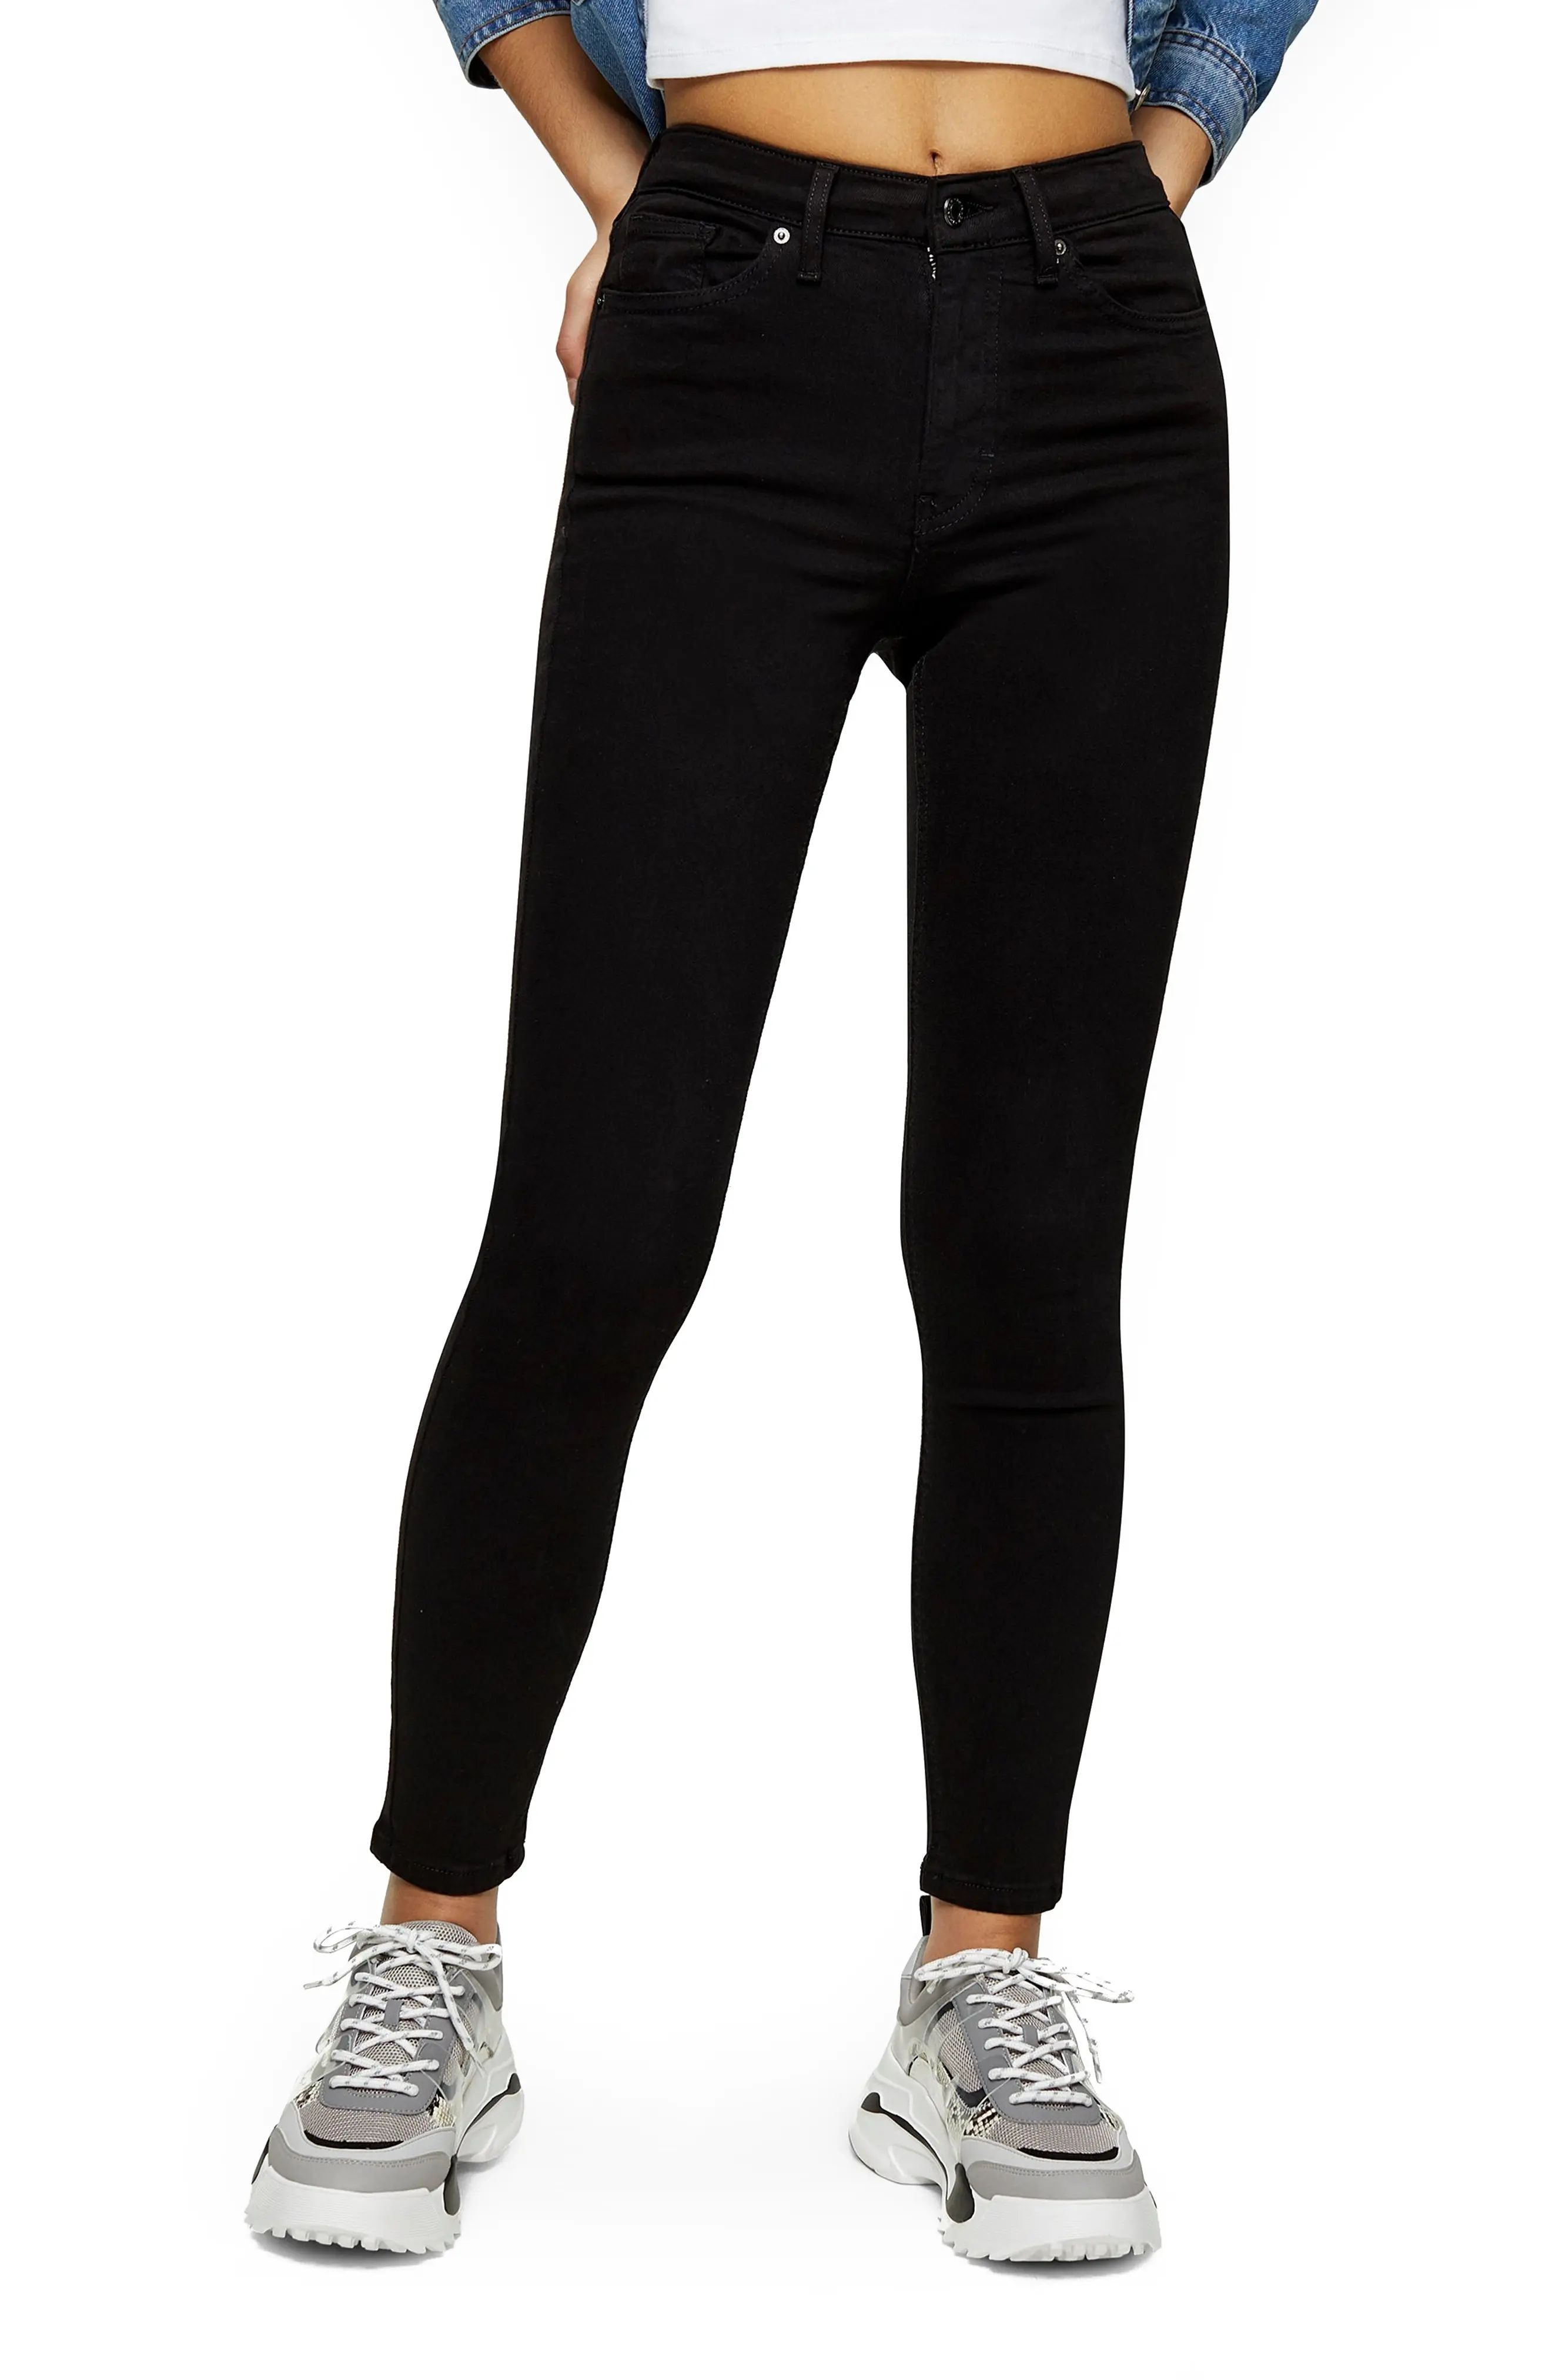 Petite Women's Topshop Jamie High Waist Black Jeans, Size 24 - Black | Nordstrom